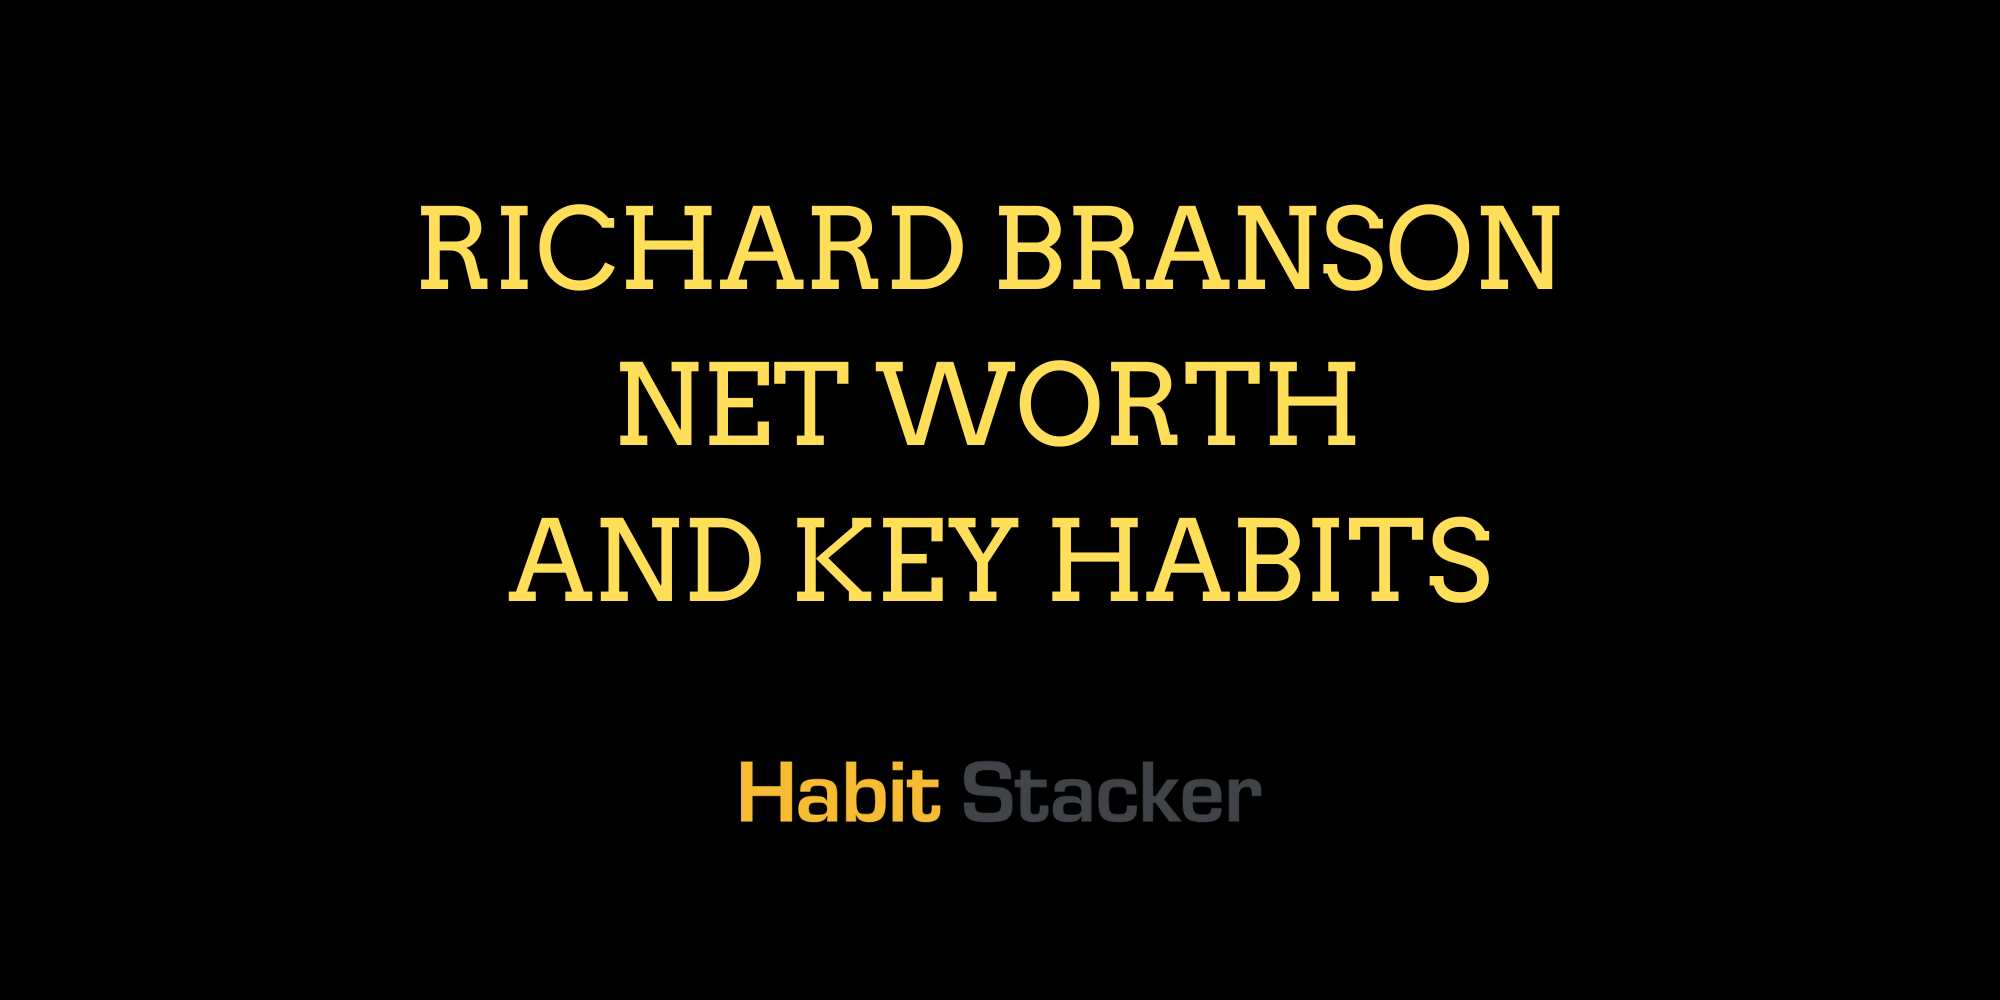 Richard Branson Net Worth and Key Habits